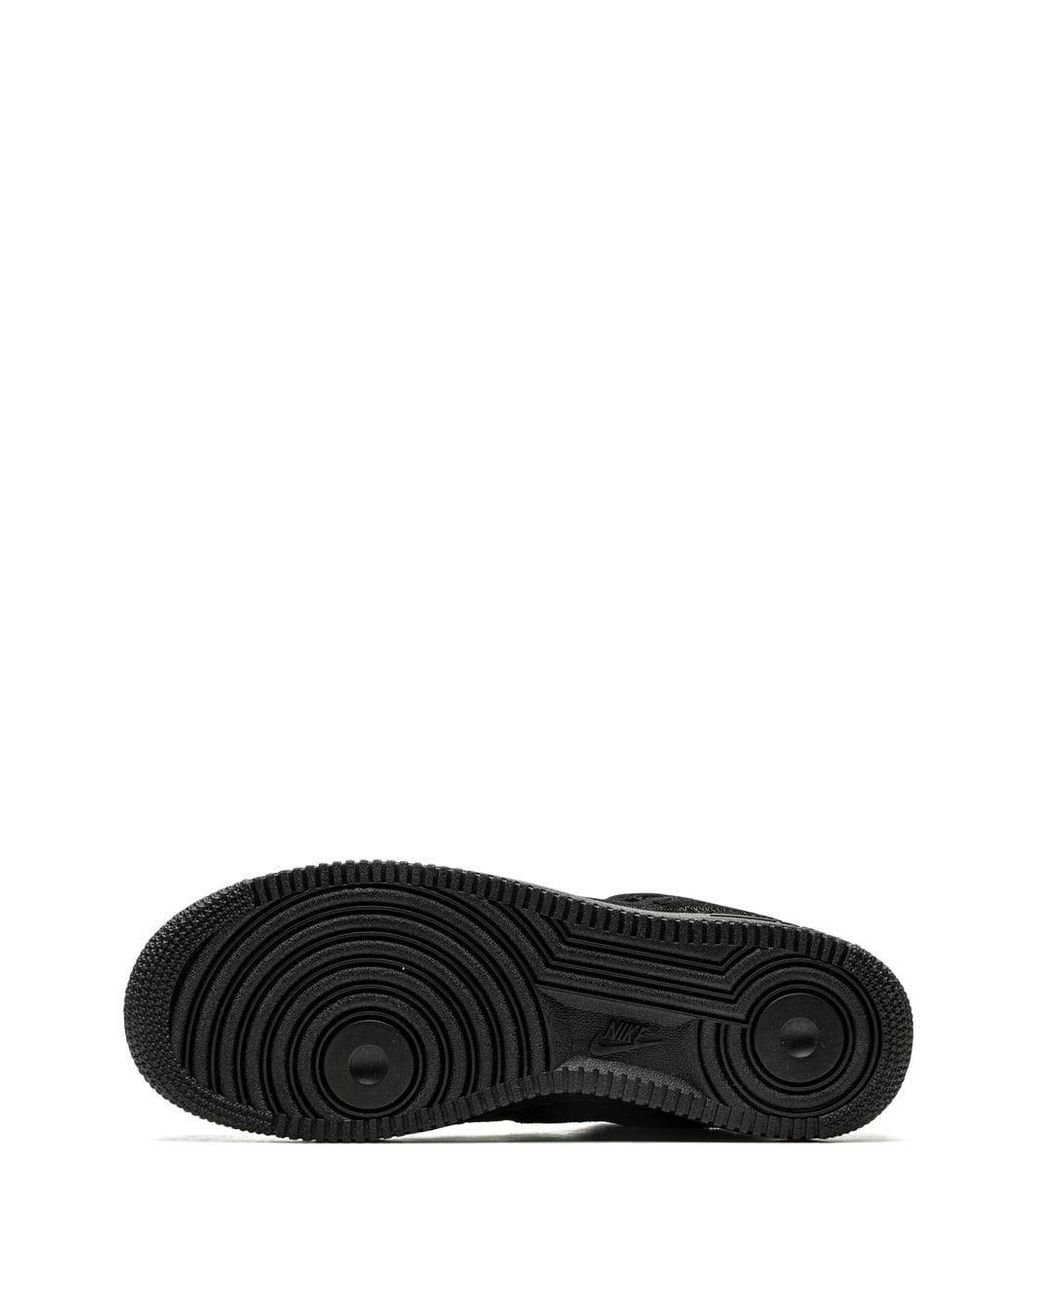 Nike X Louis Vuitton Air Force 1 Low Sneakers in Black